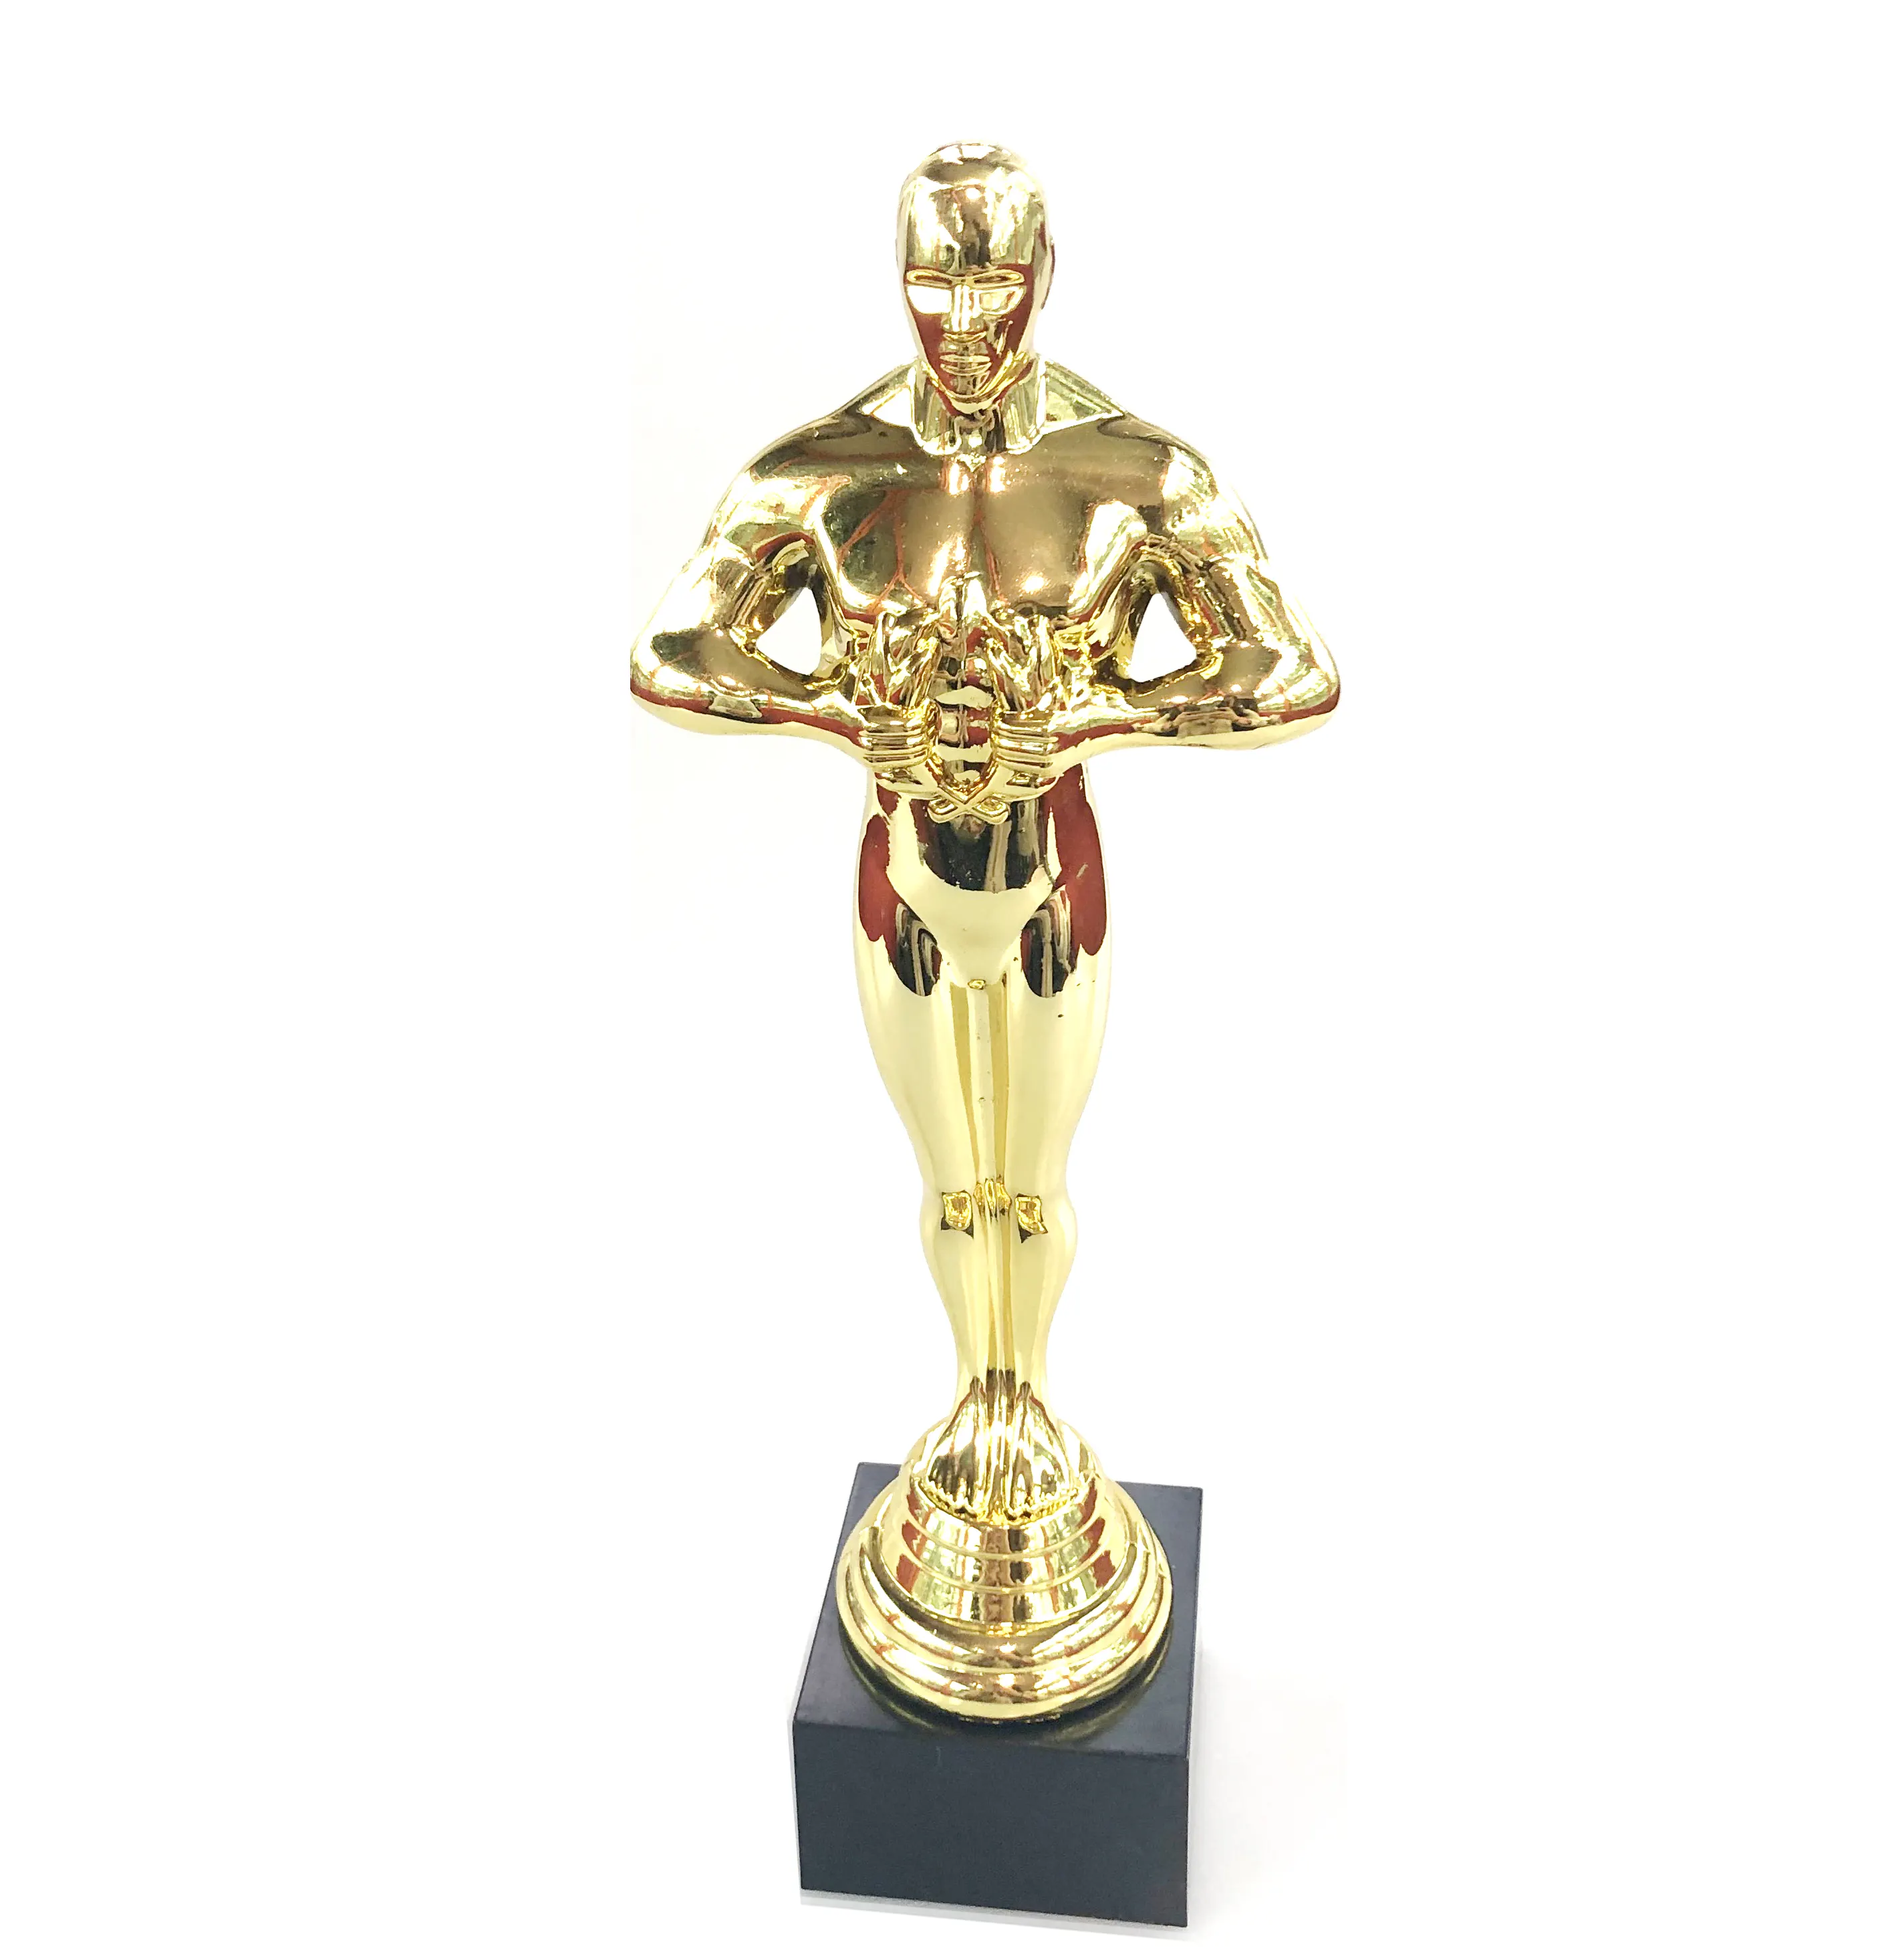 Golden appreciation gift award of honor trophy statues award ceremonies award trophy